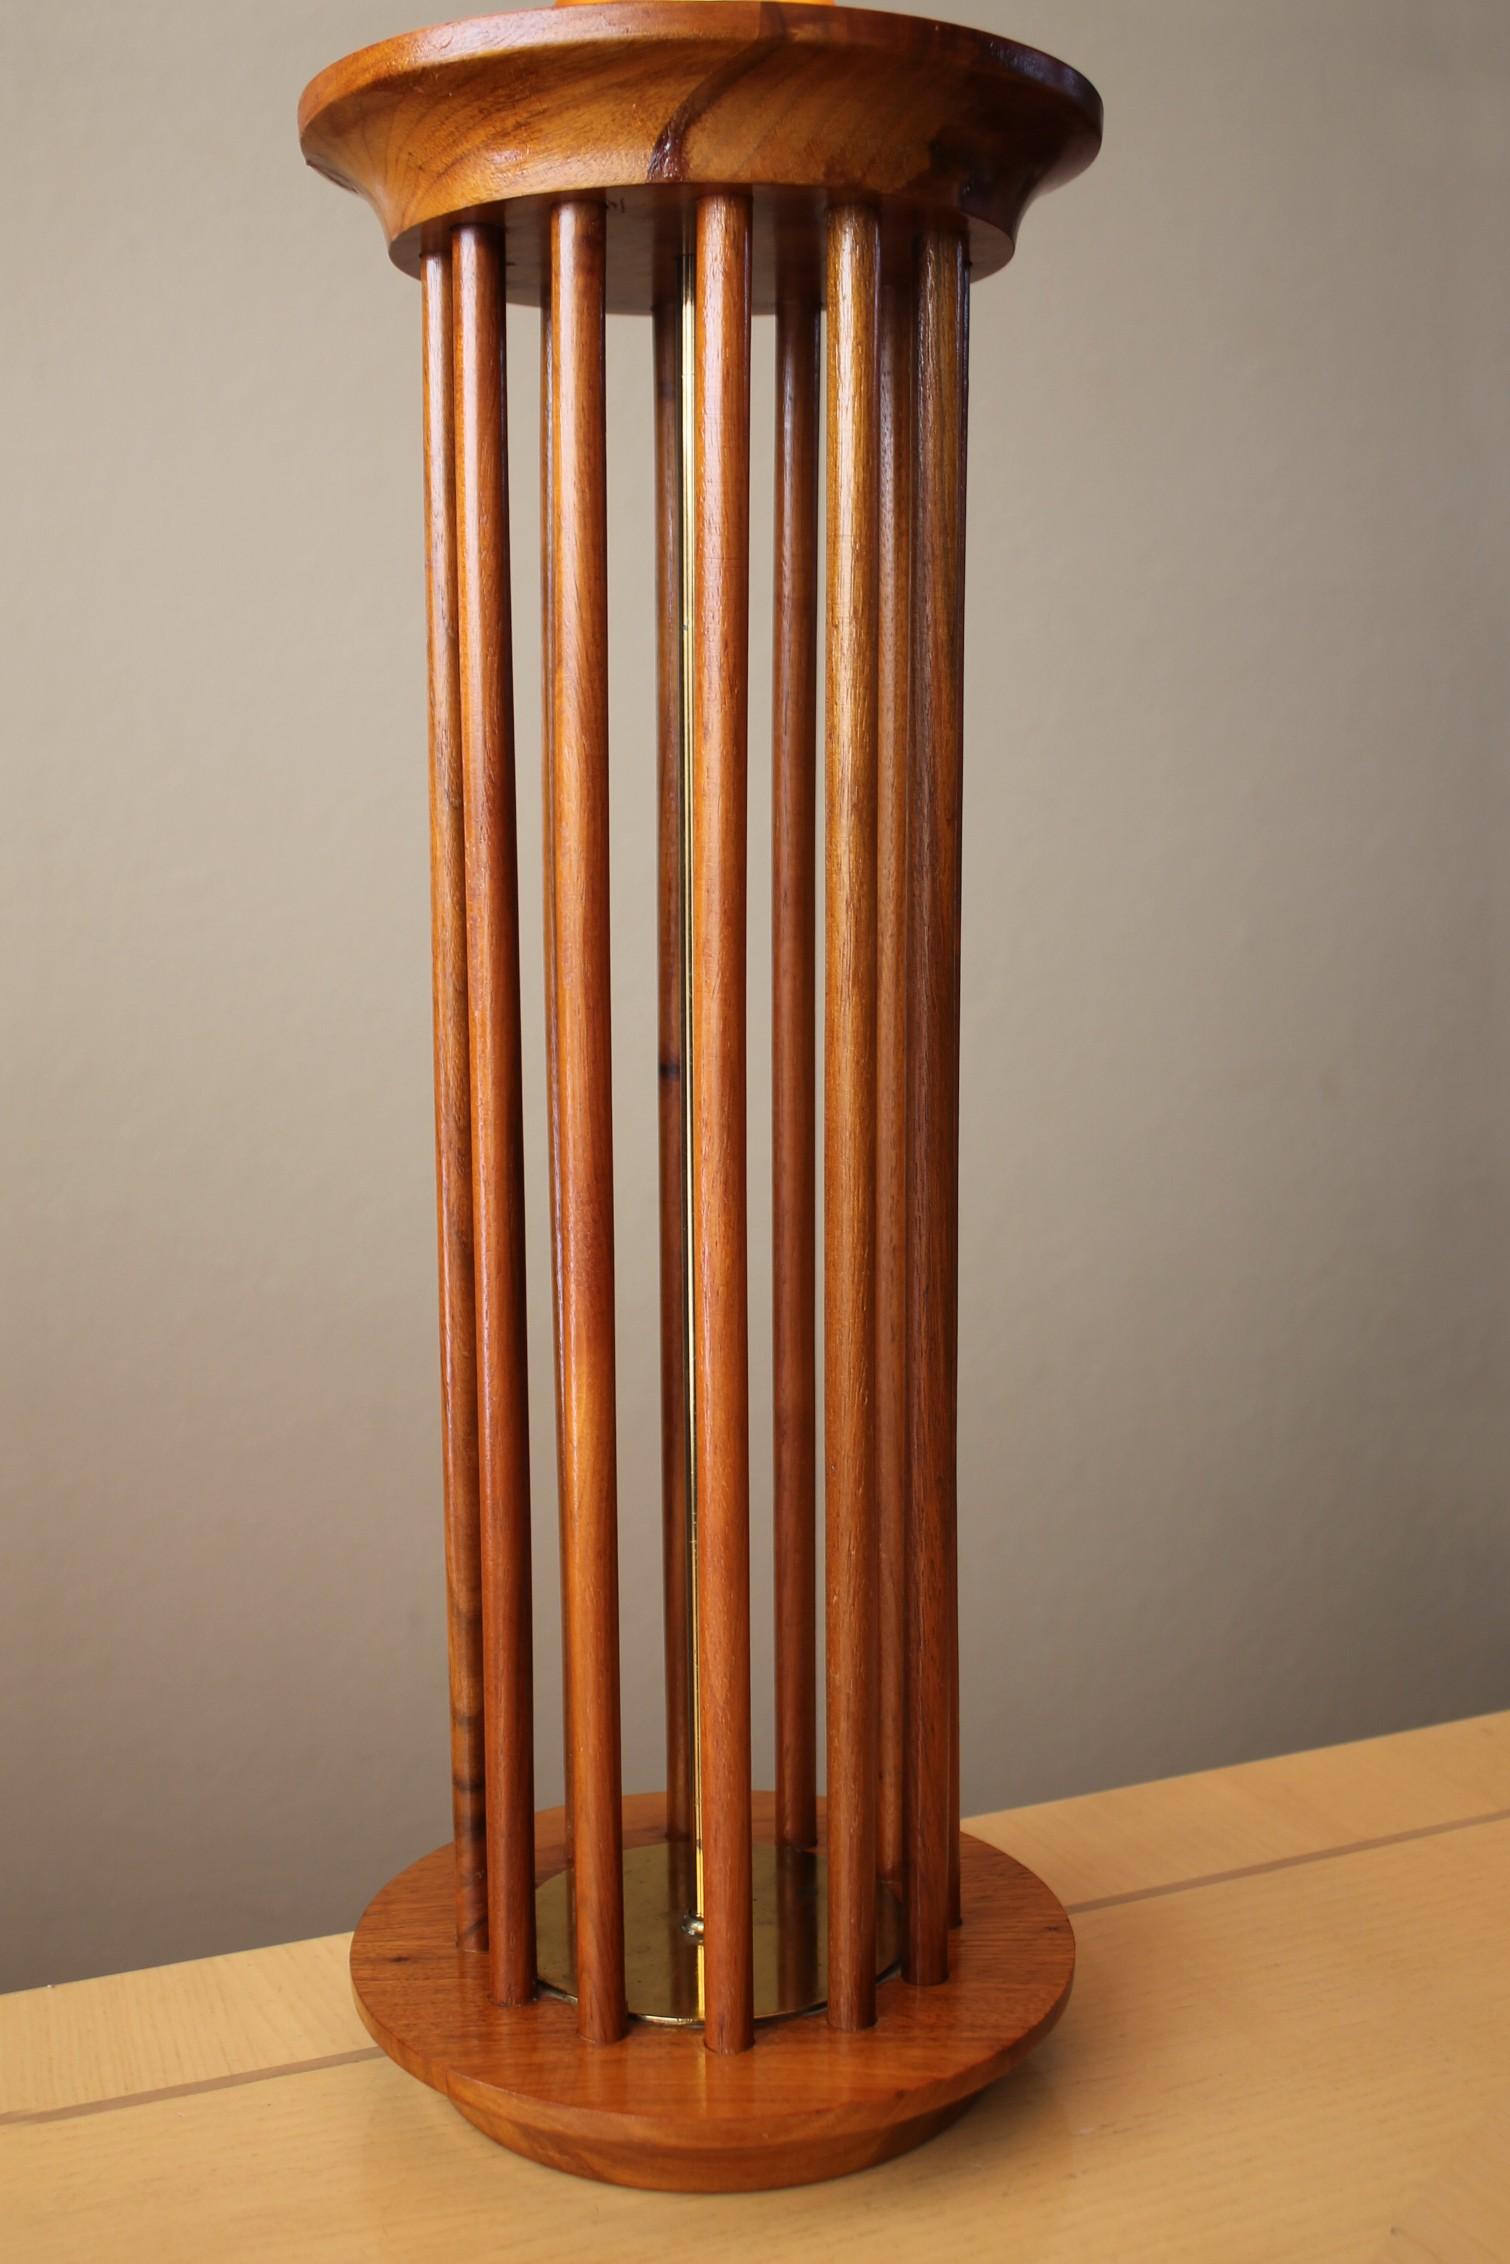 American Glorious MId Century Danish Modern Modeline Teak Table Lamp 1950s Art Sculpture For Sale